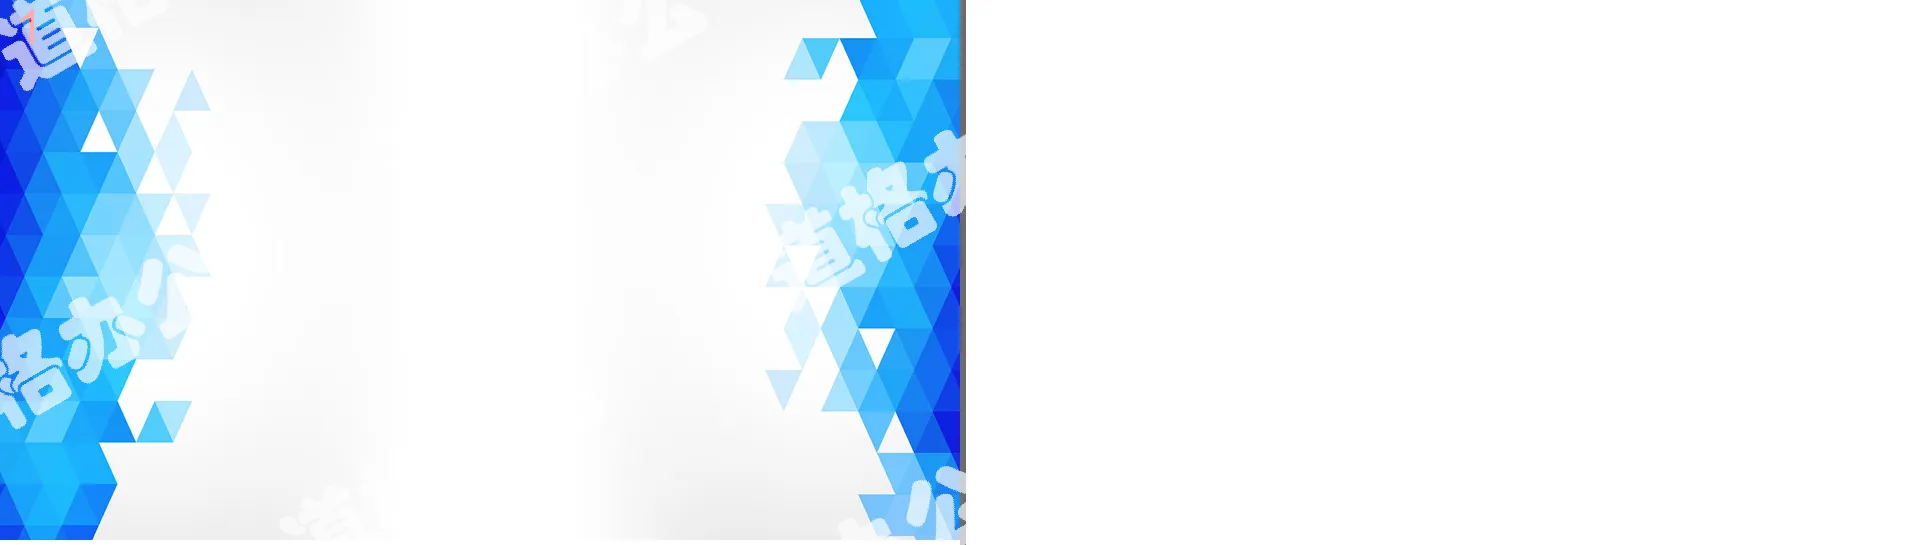 Business slideshow background image with blue polygonal background